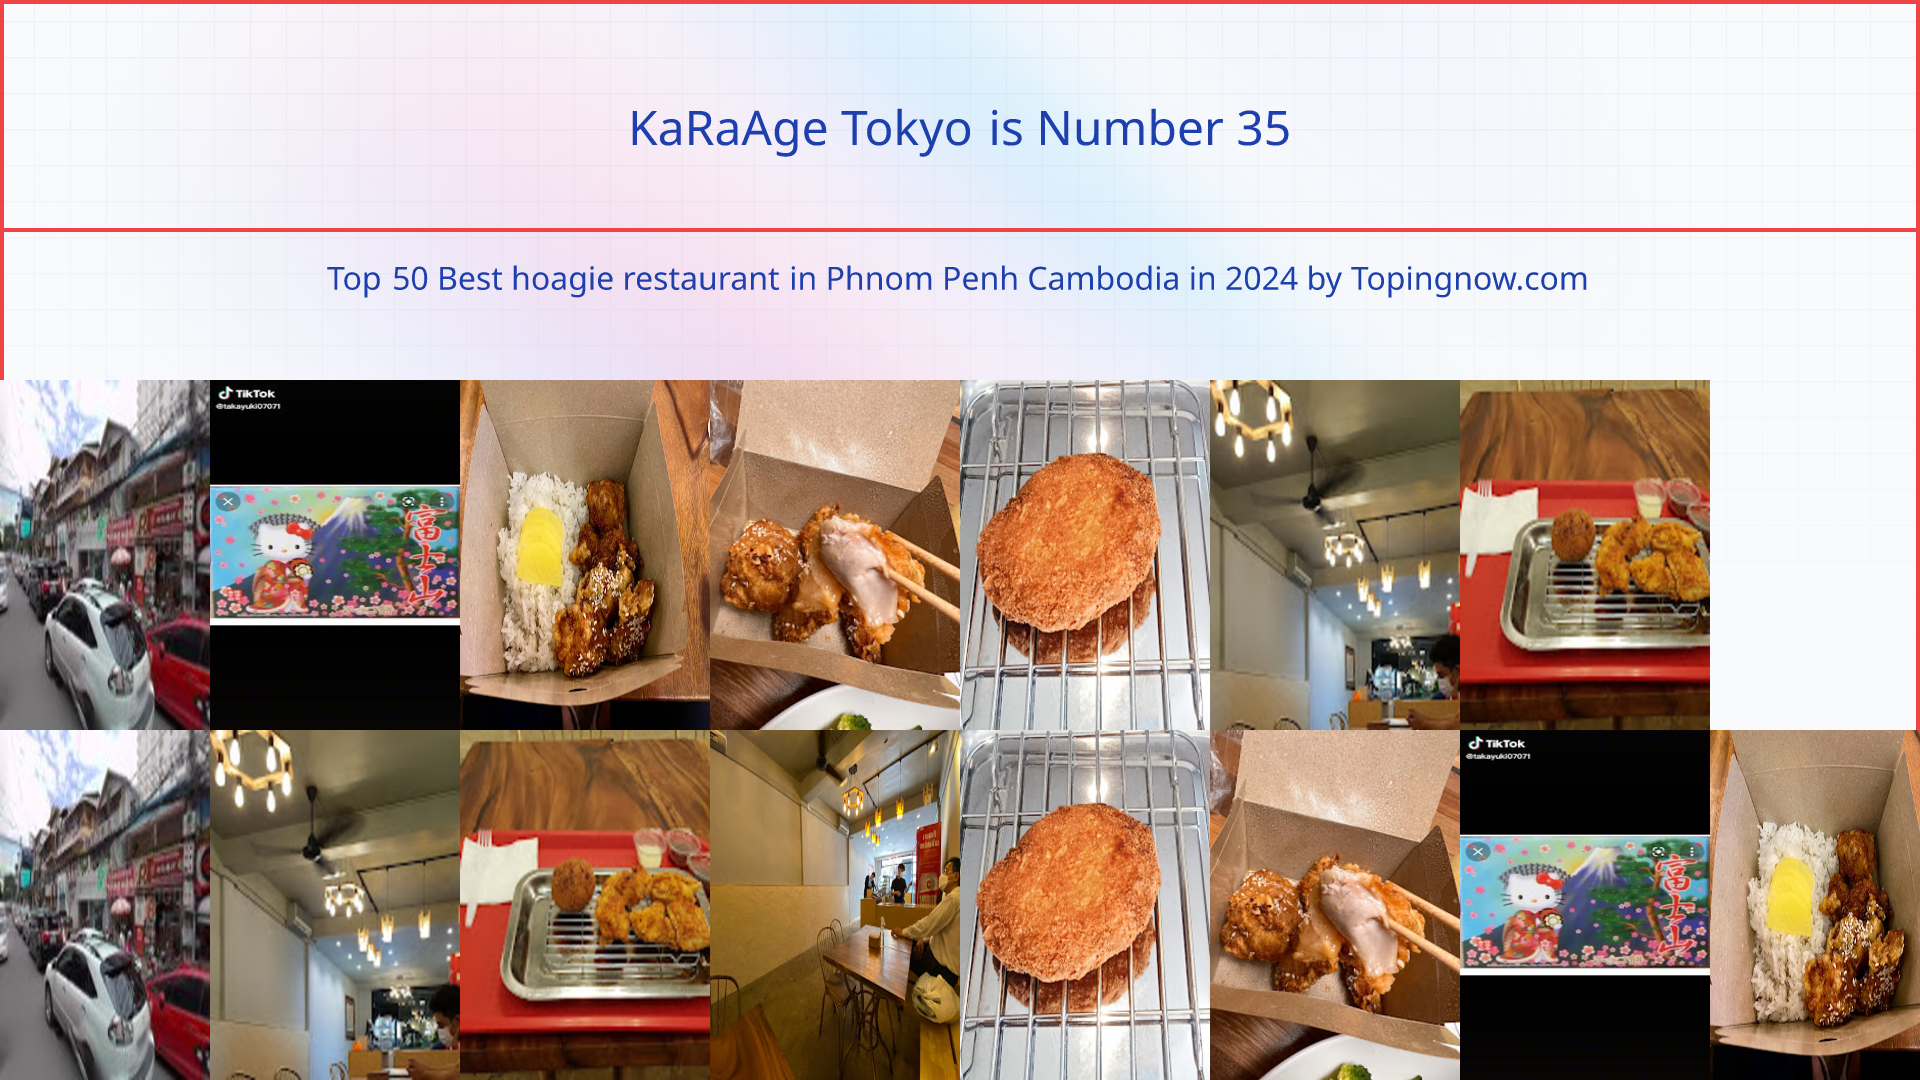 KaRaAge Tokyo: Top 50 Best hoagie restaurant in Phnom Penh Cambodia in 2024